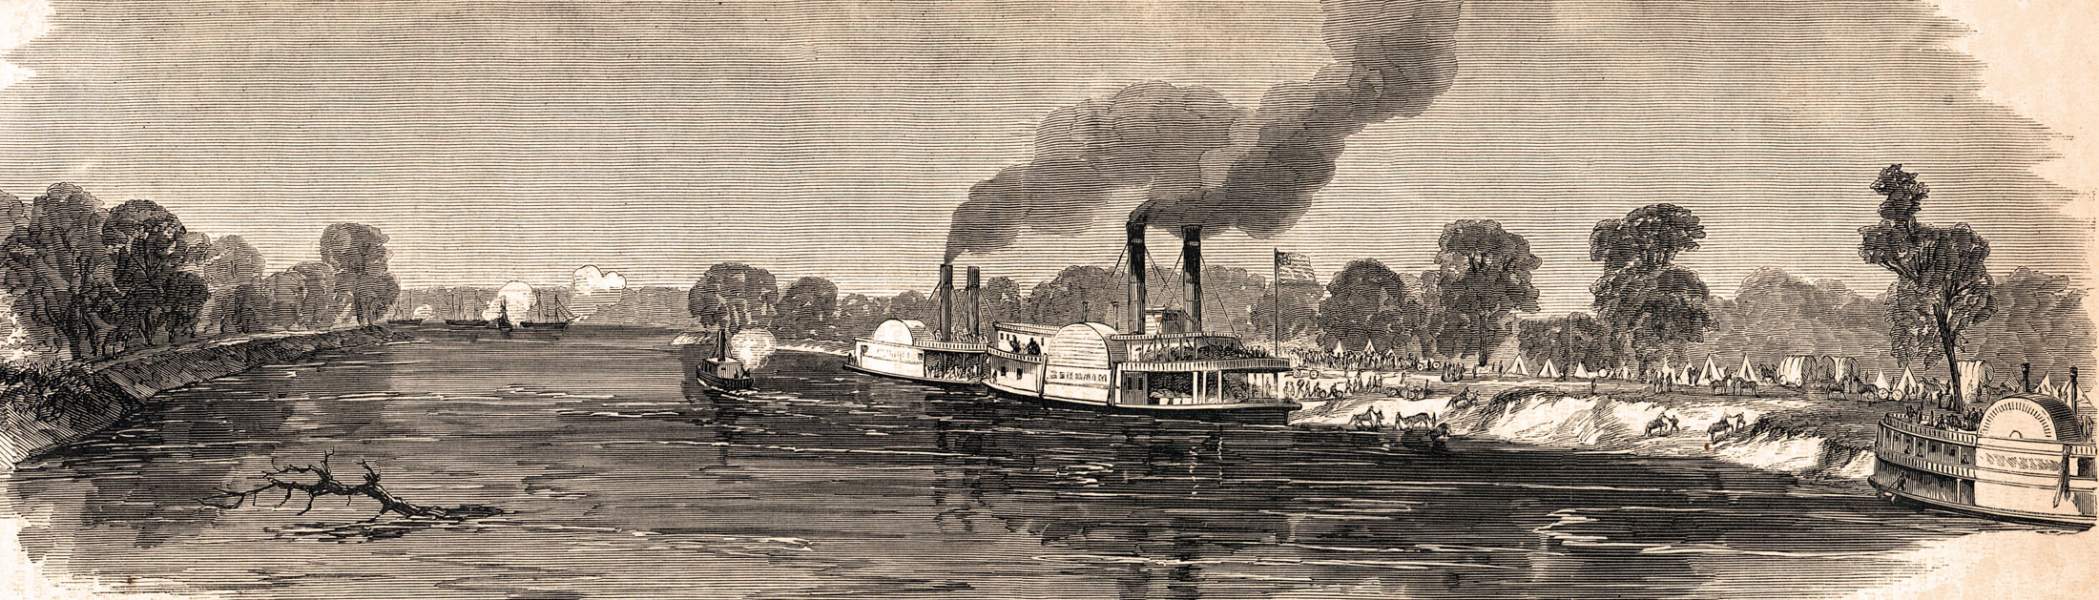 Springfield Landing, Louisiana, June 1863, artist's impression, zoomable image